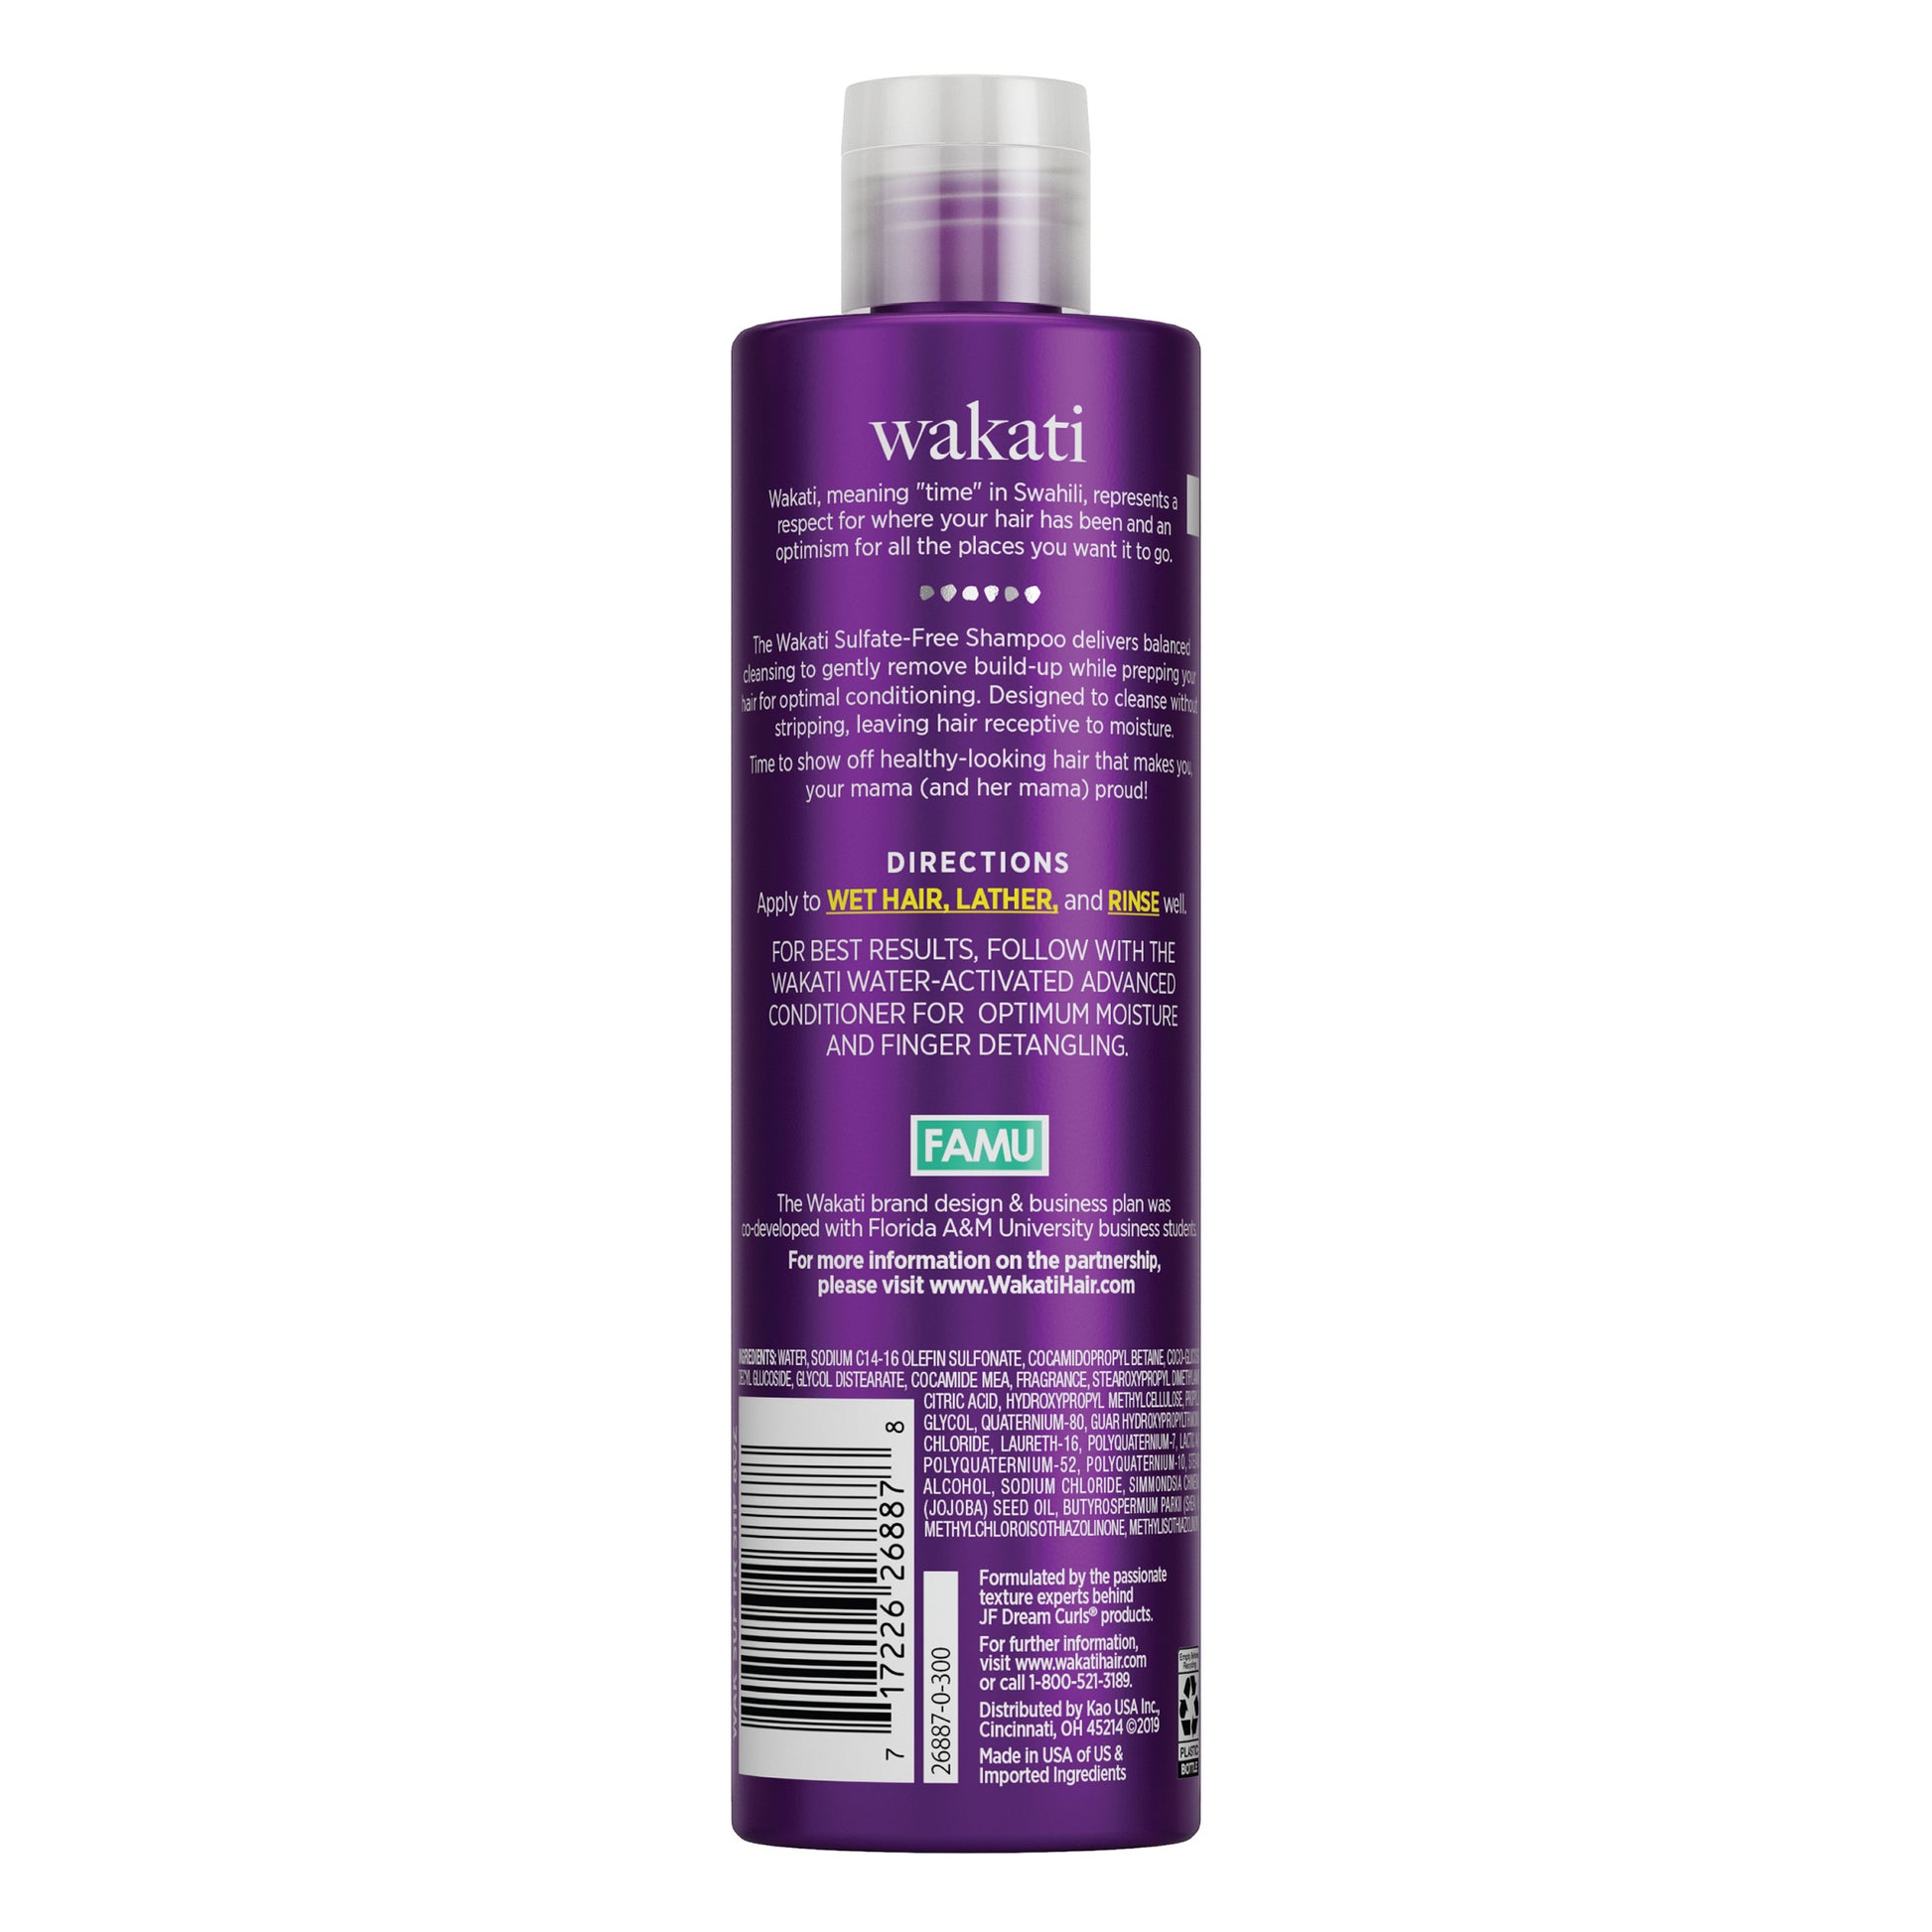 wakati sulfate-free shampoo back of packaging